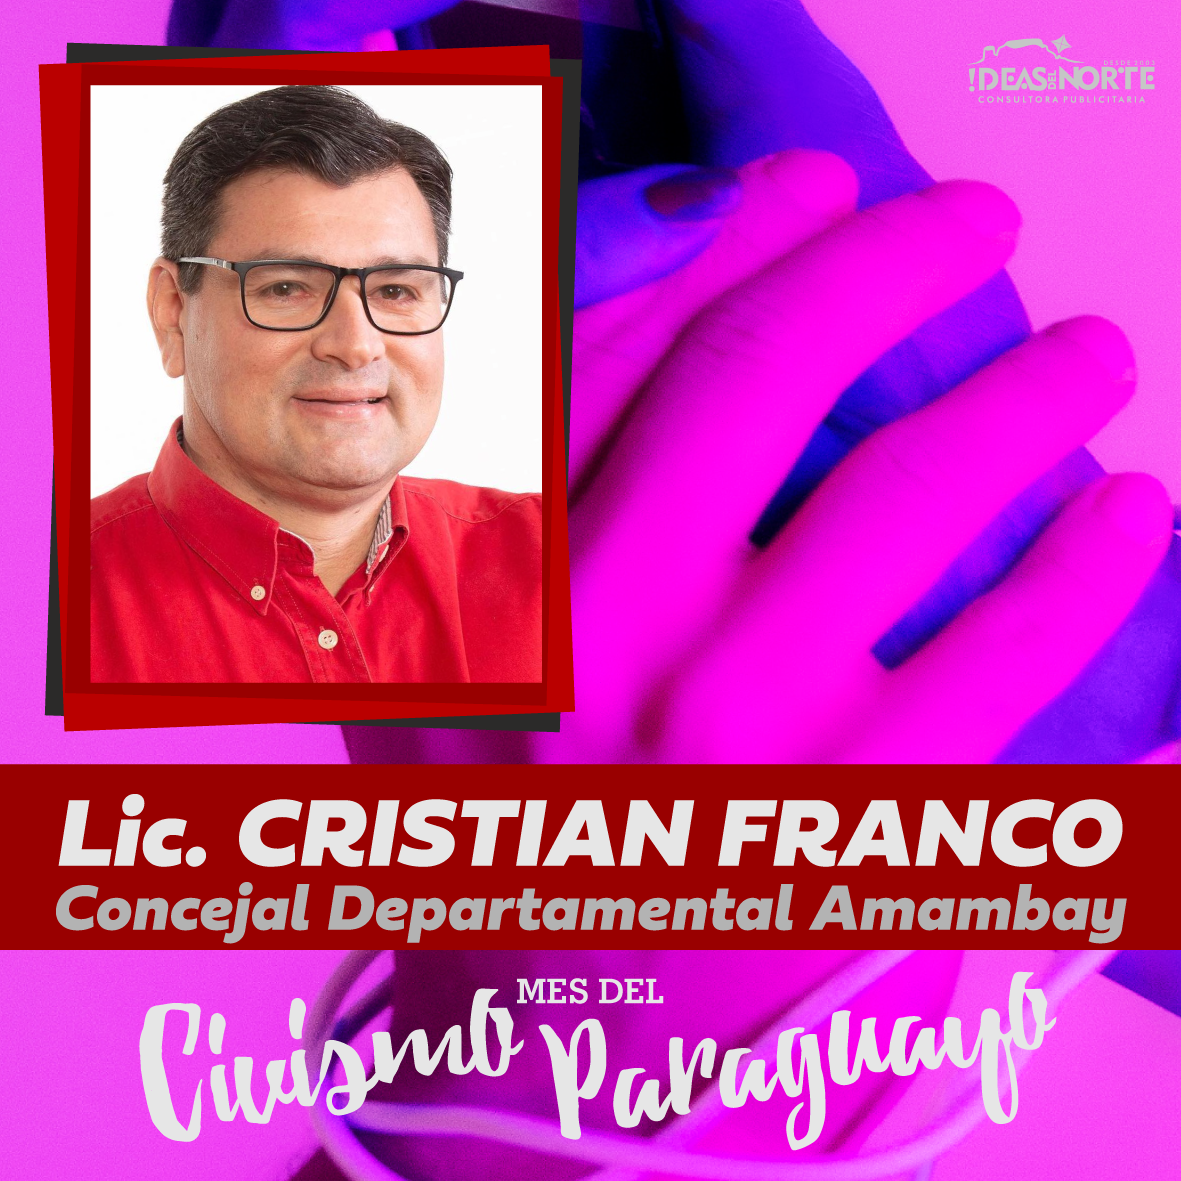 Cristian Franco